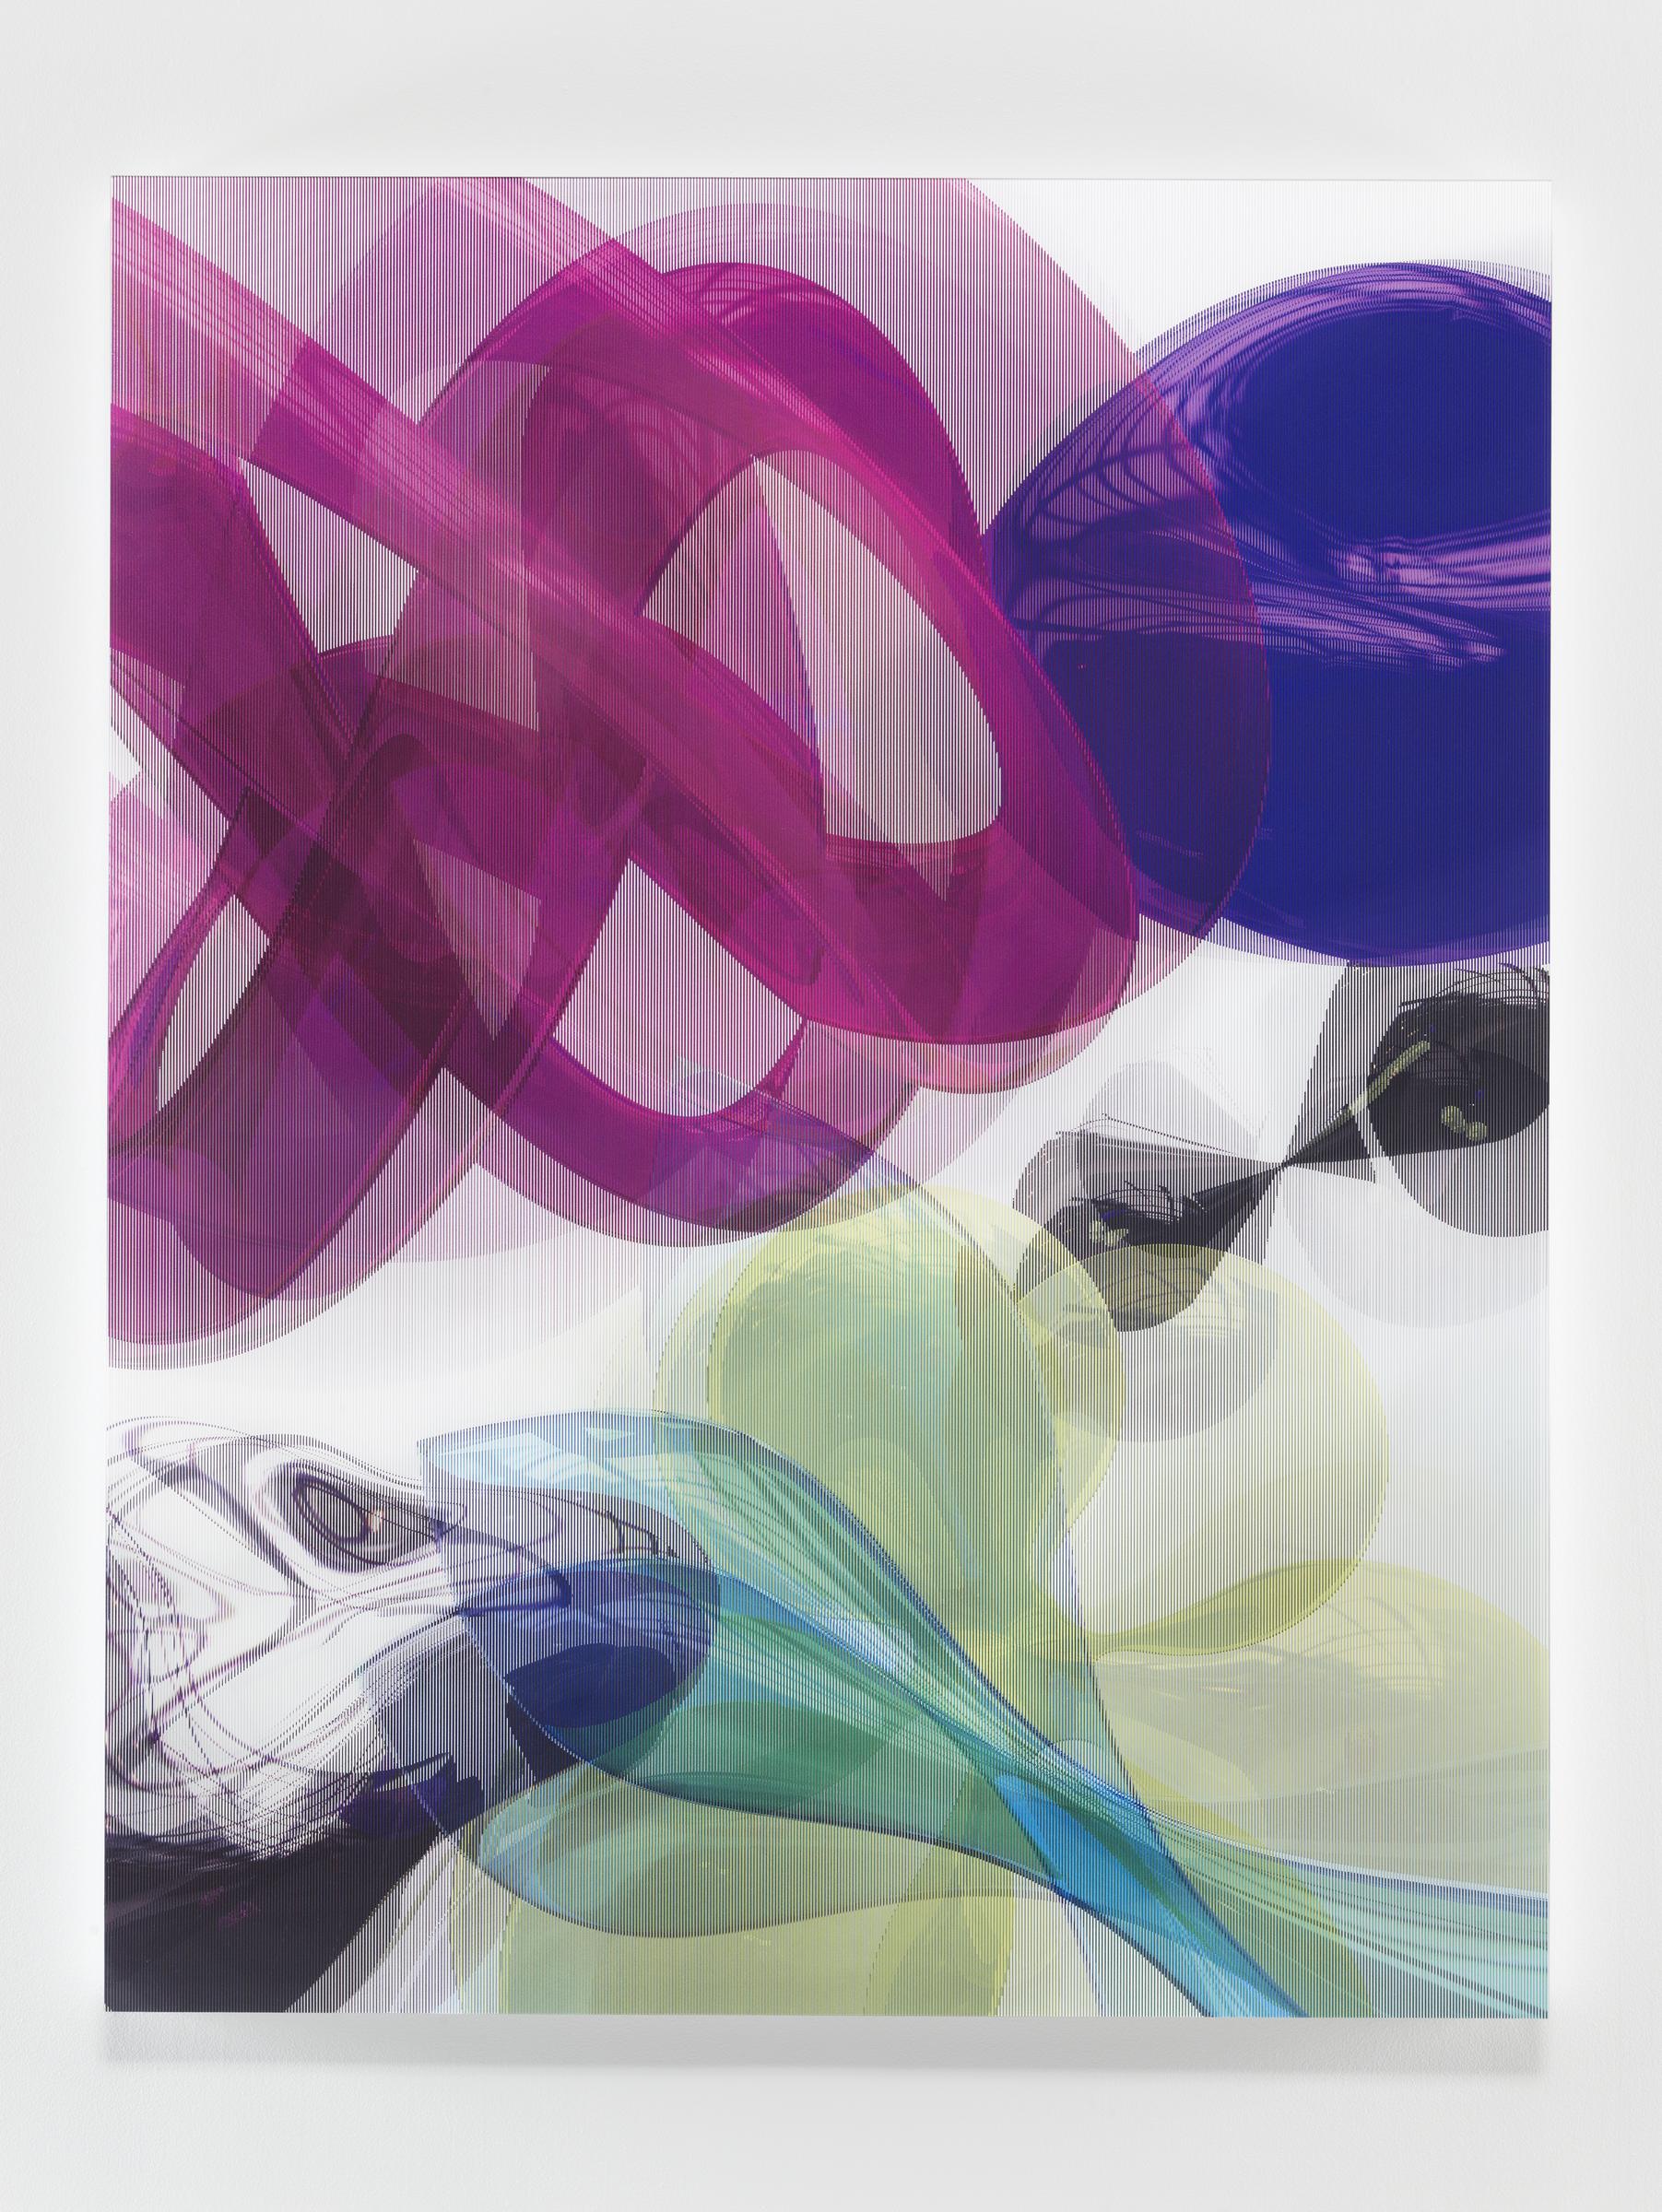 KARIM RASHID
Ikon (Infinity), 2012
Lenticular print
59 x 46 1/4 inches
unique
SGI2083